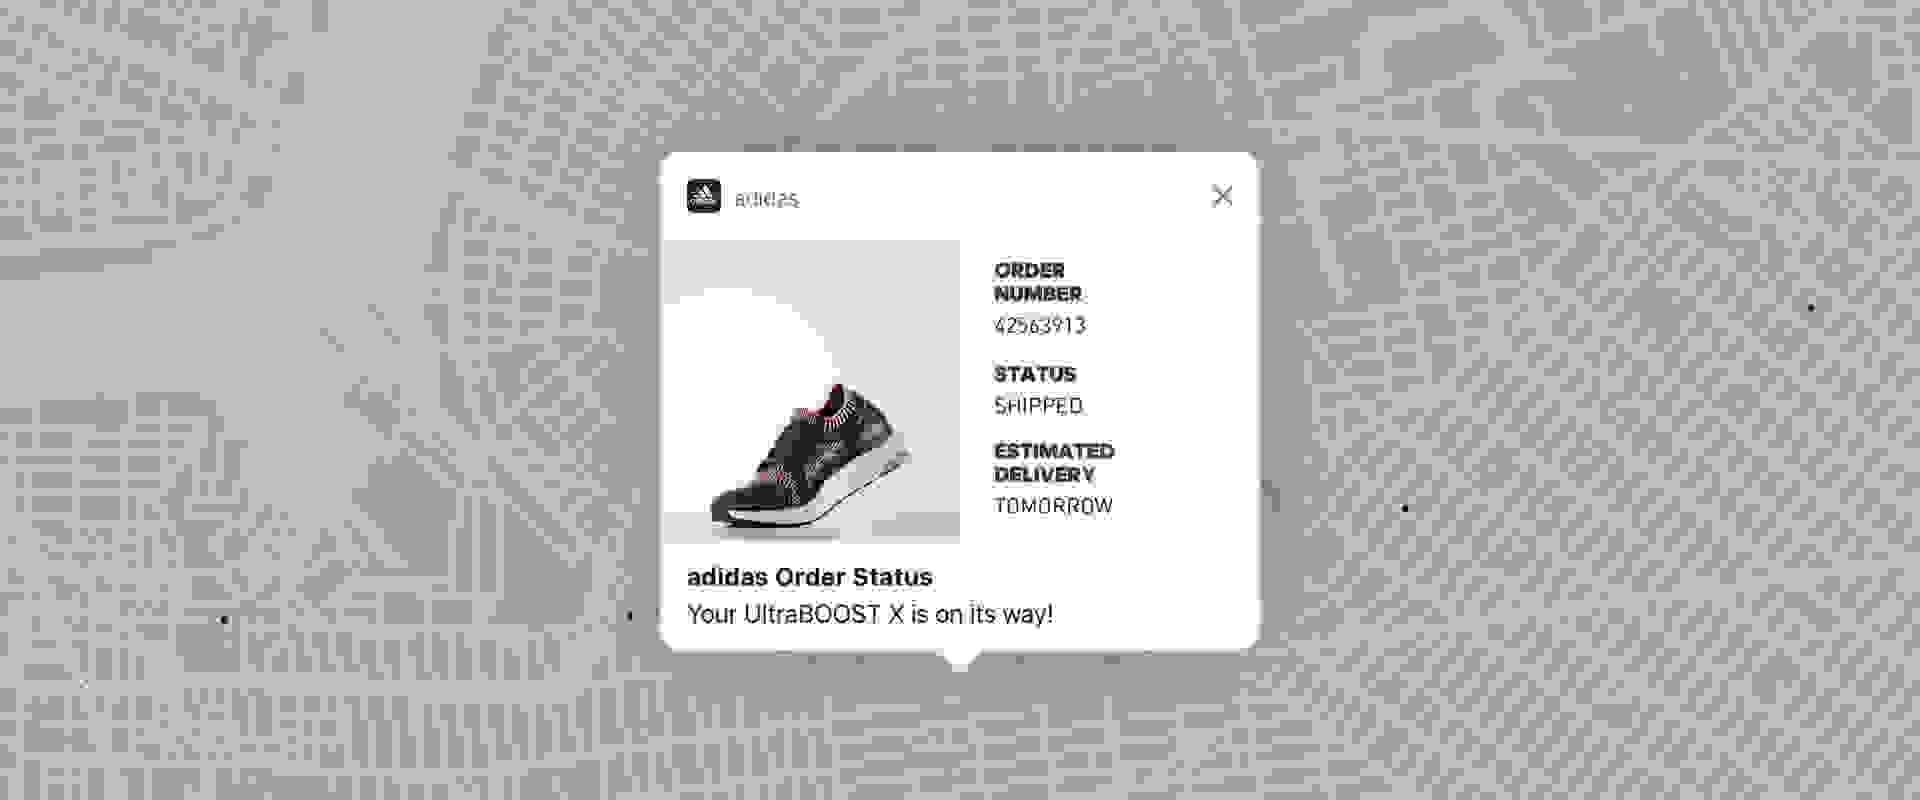 adidas app to buy yeezy